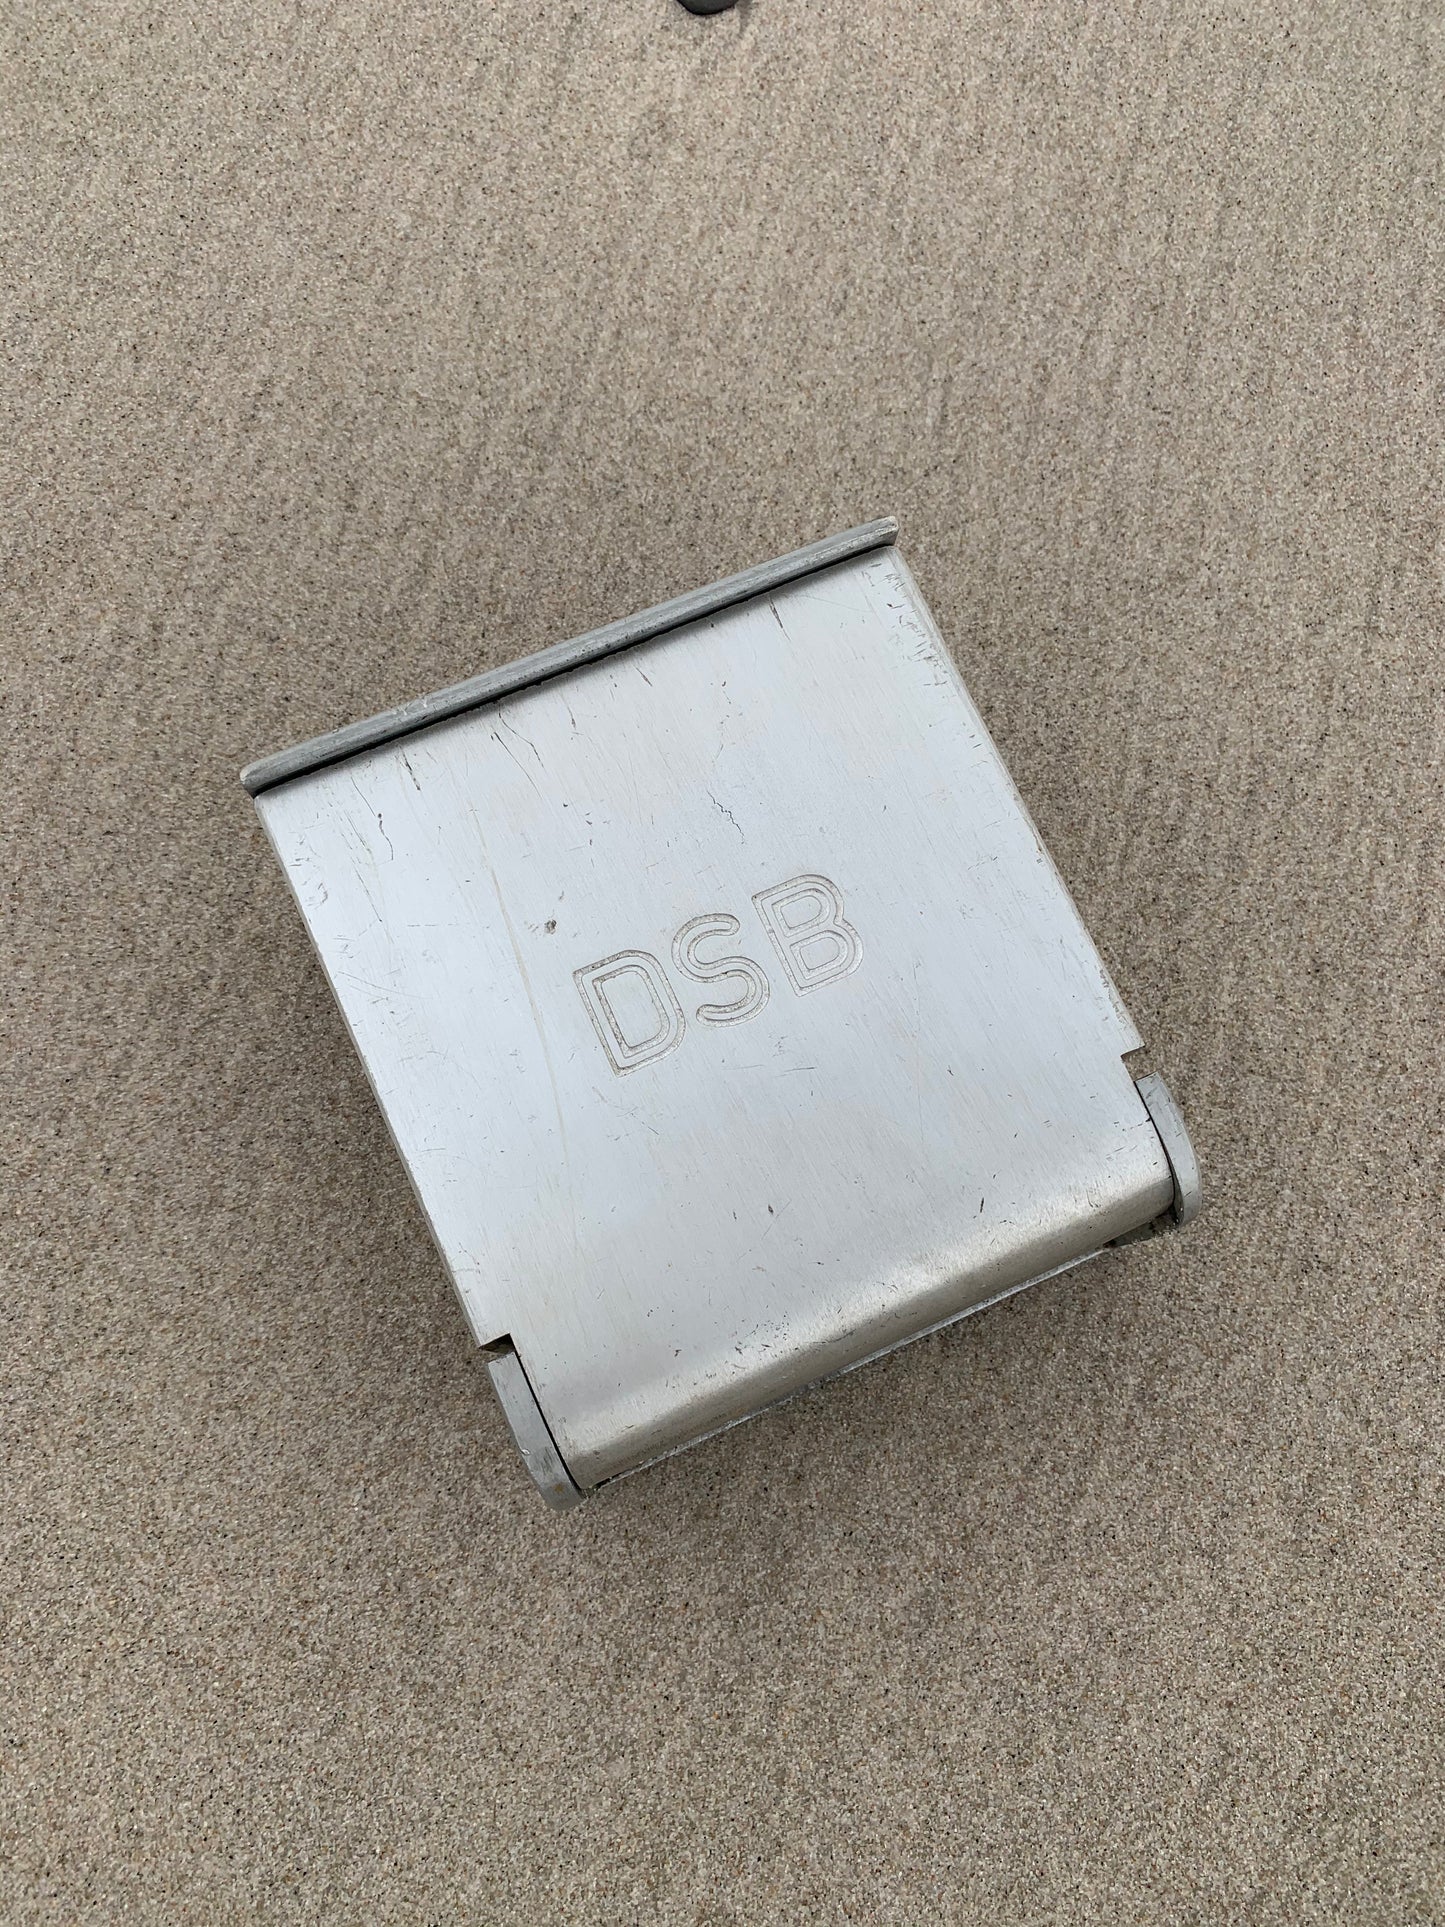 DSB askkopp - Stor modell